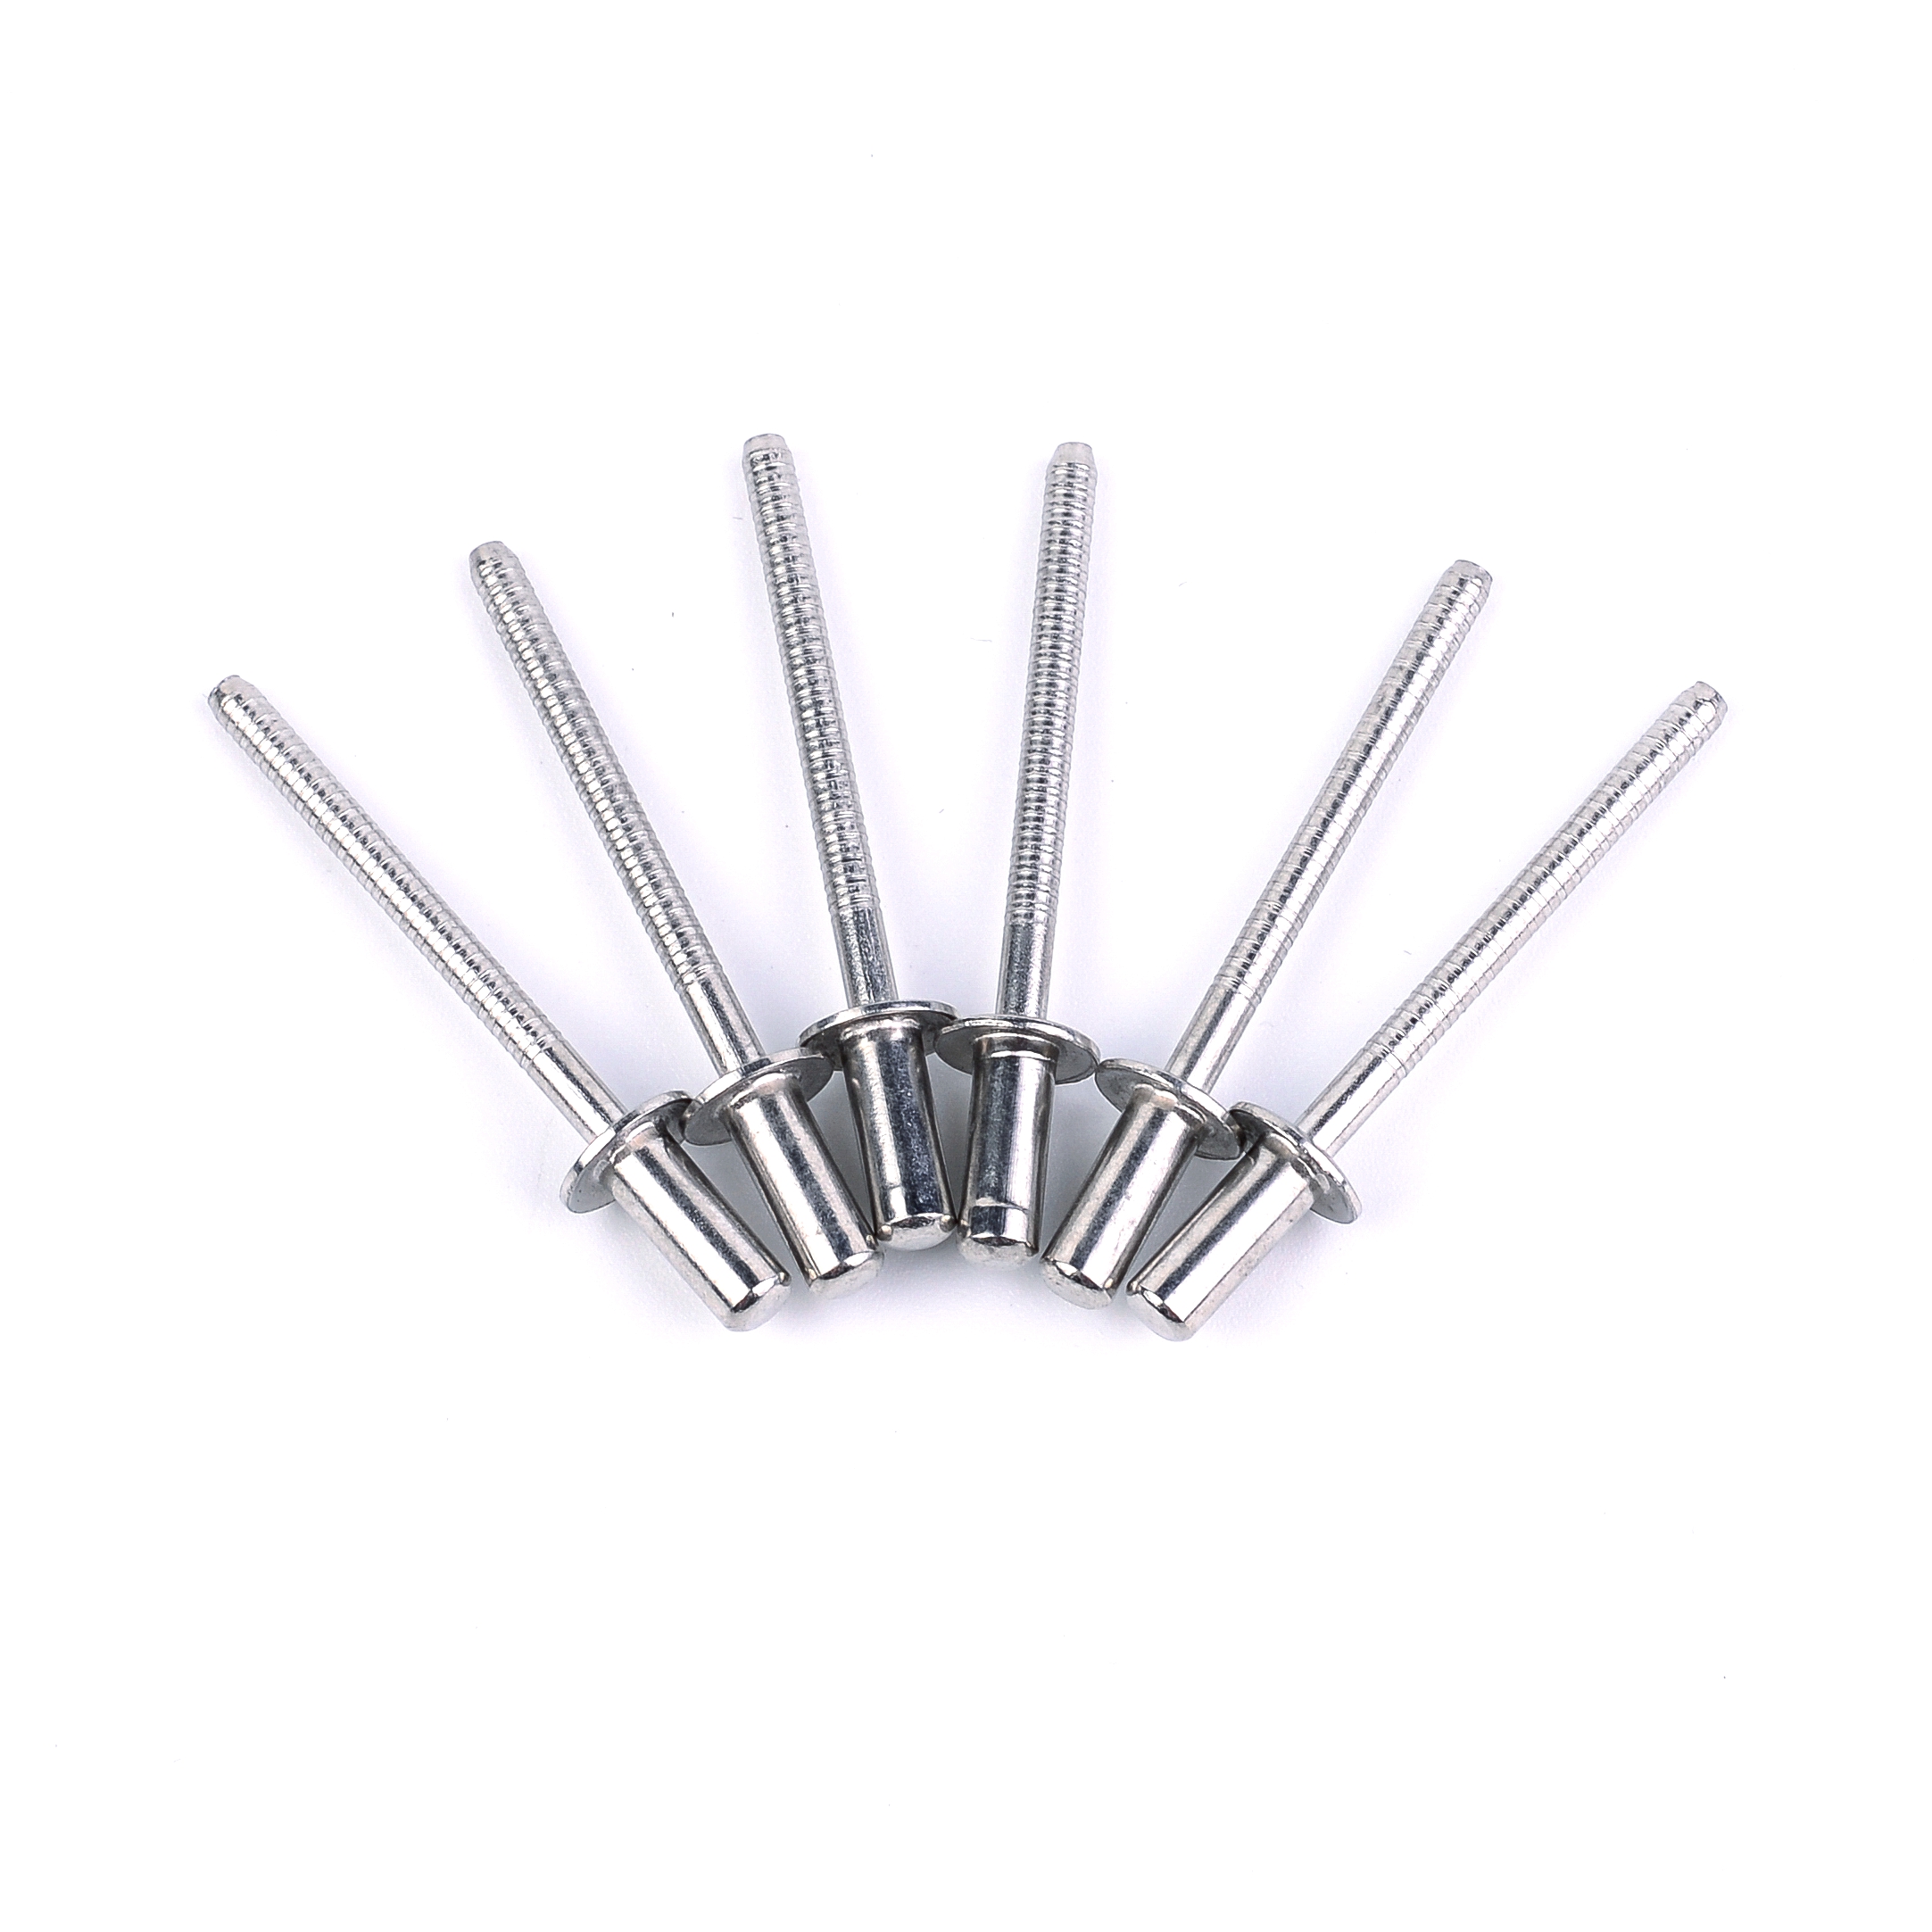 A wide range of rivets | Fastener + Fixing Magazine